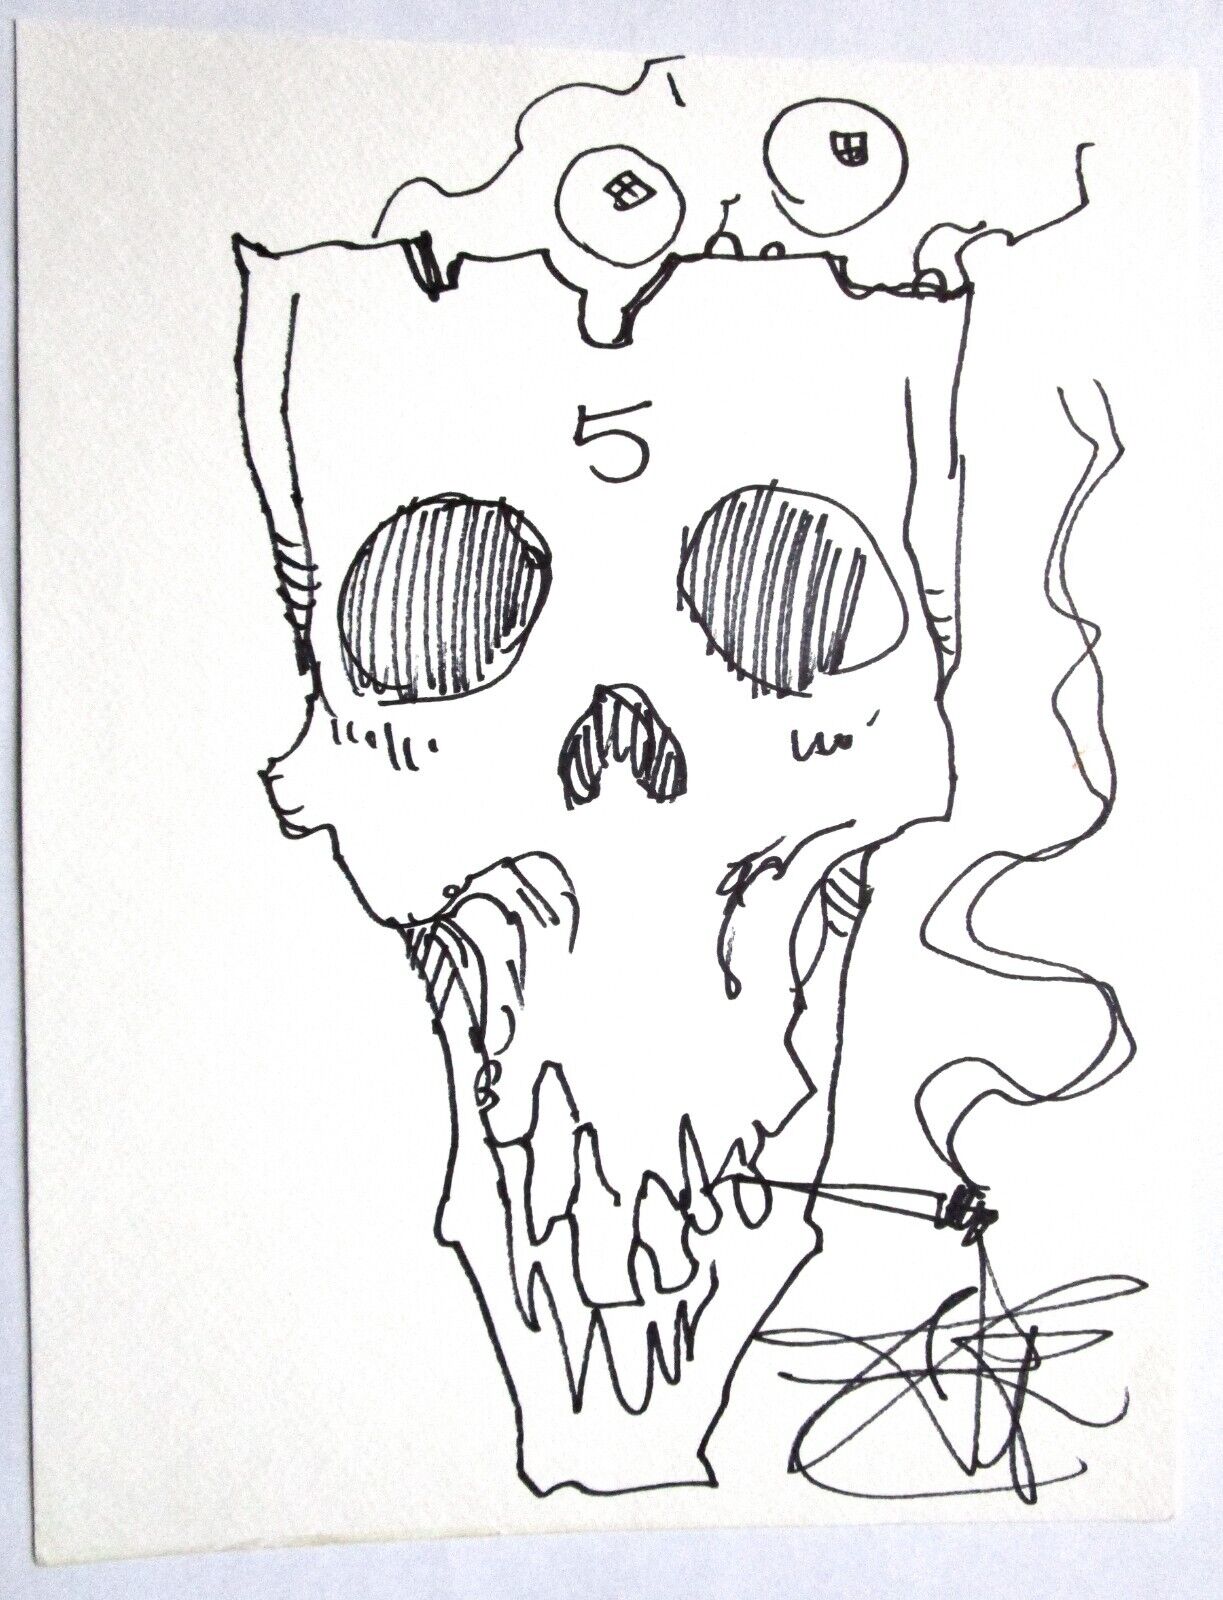 CHET ZAR ORIGINAL SMOKING SKULL ORIGINAL COMIC BOOK URBAN ART DRAWING